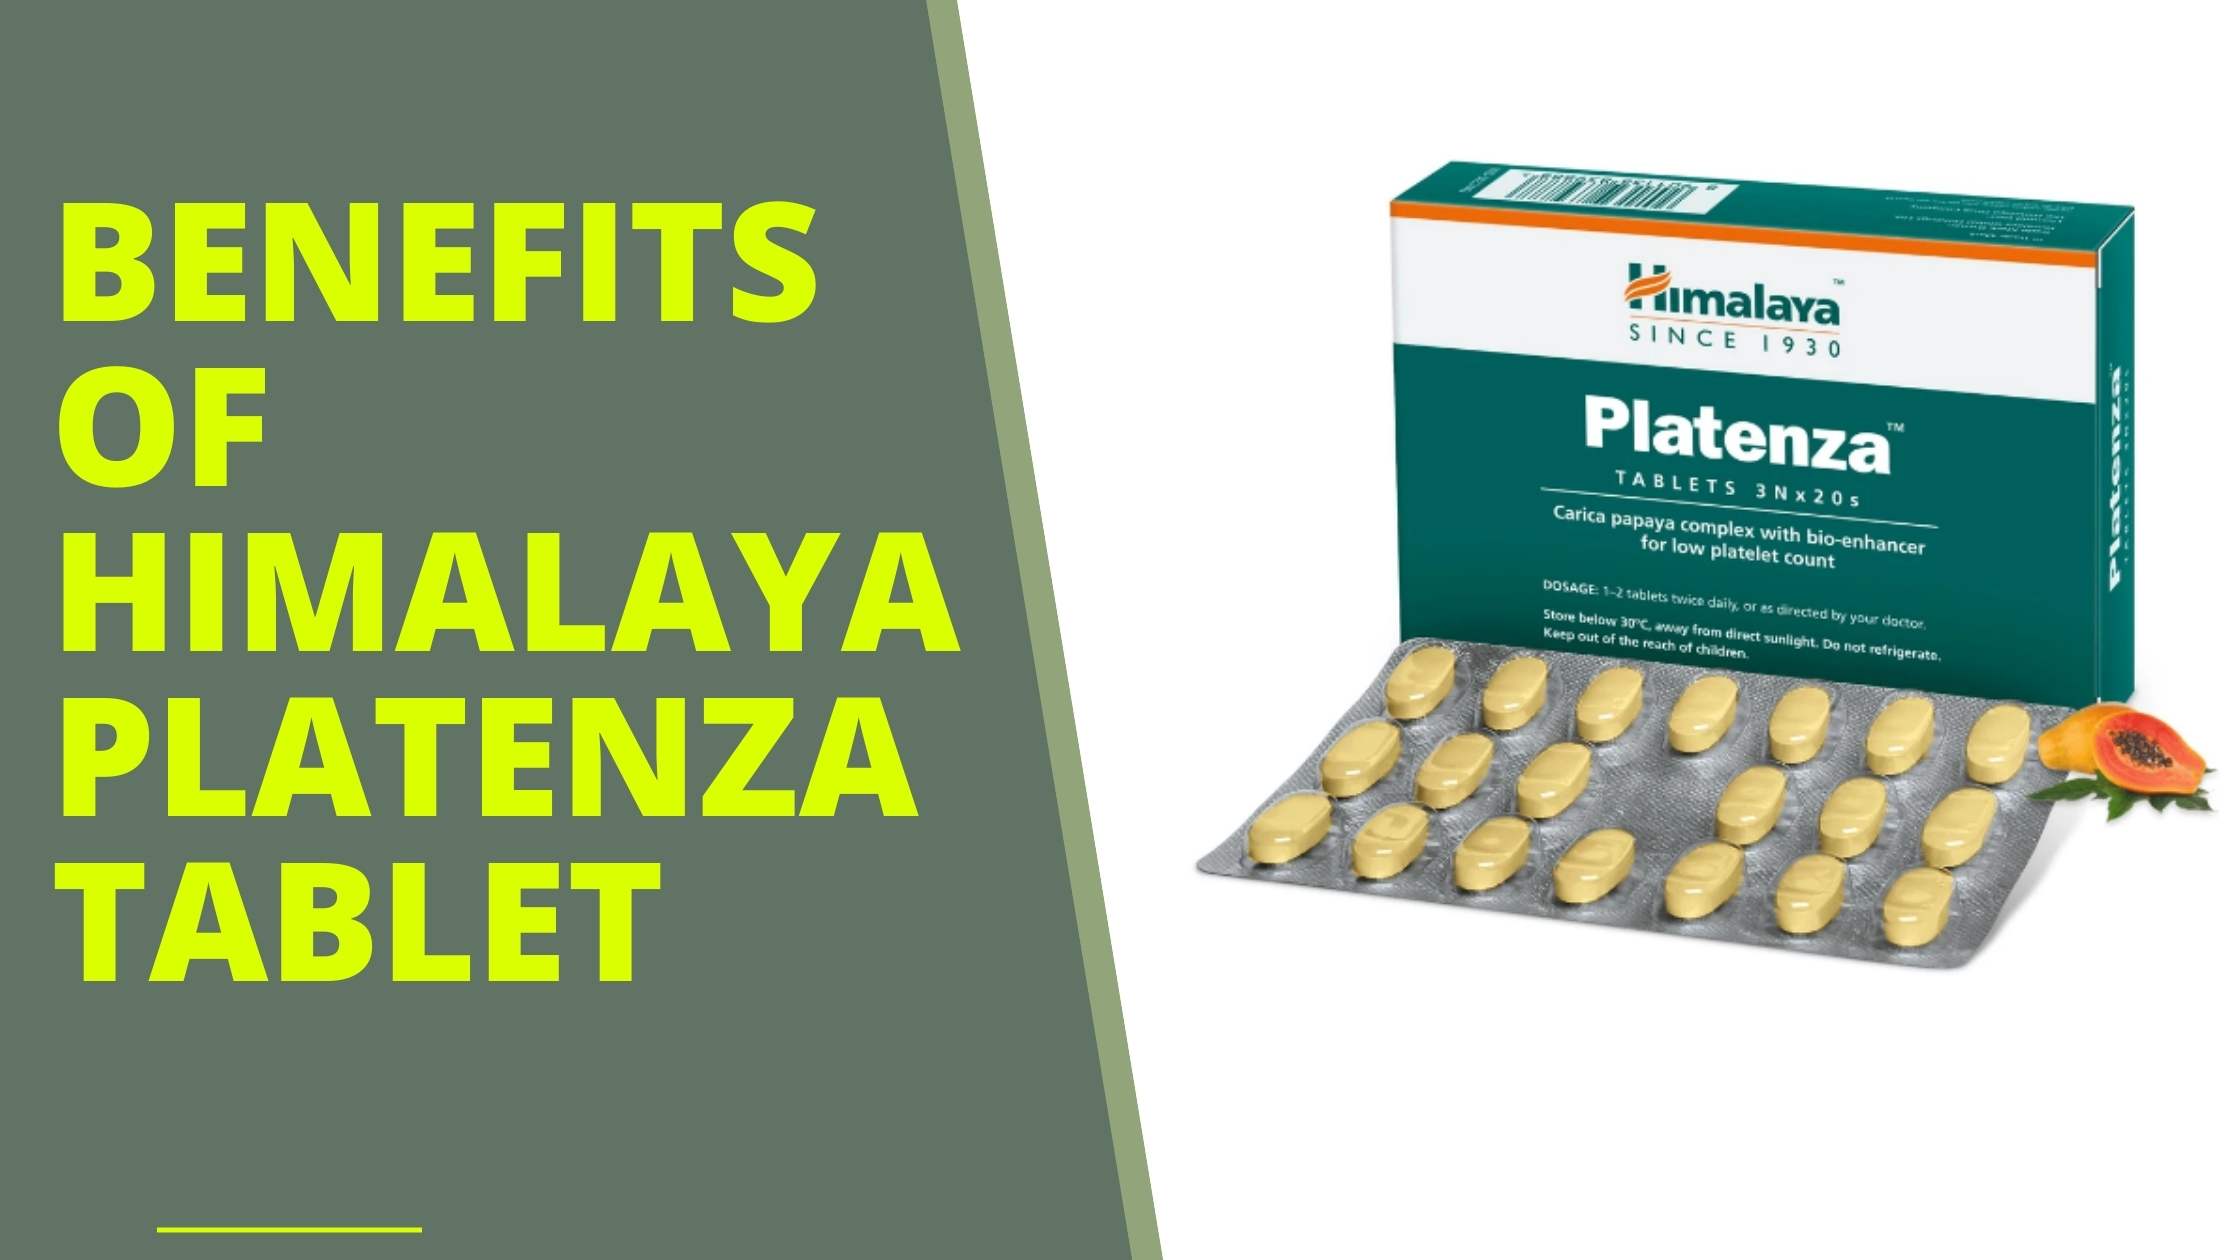 Himalaya Platenza tablet